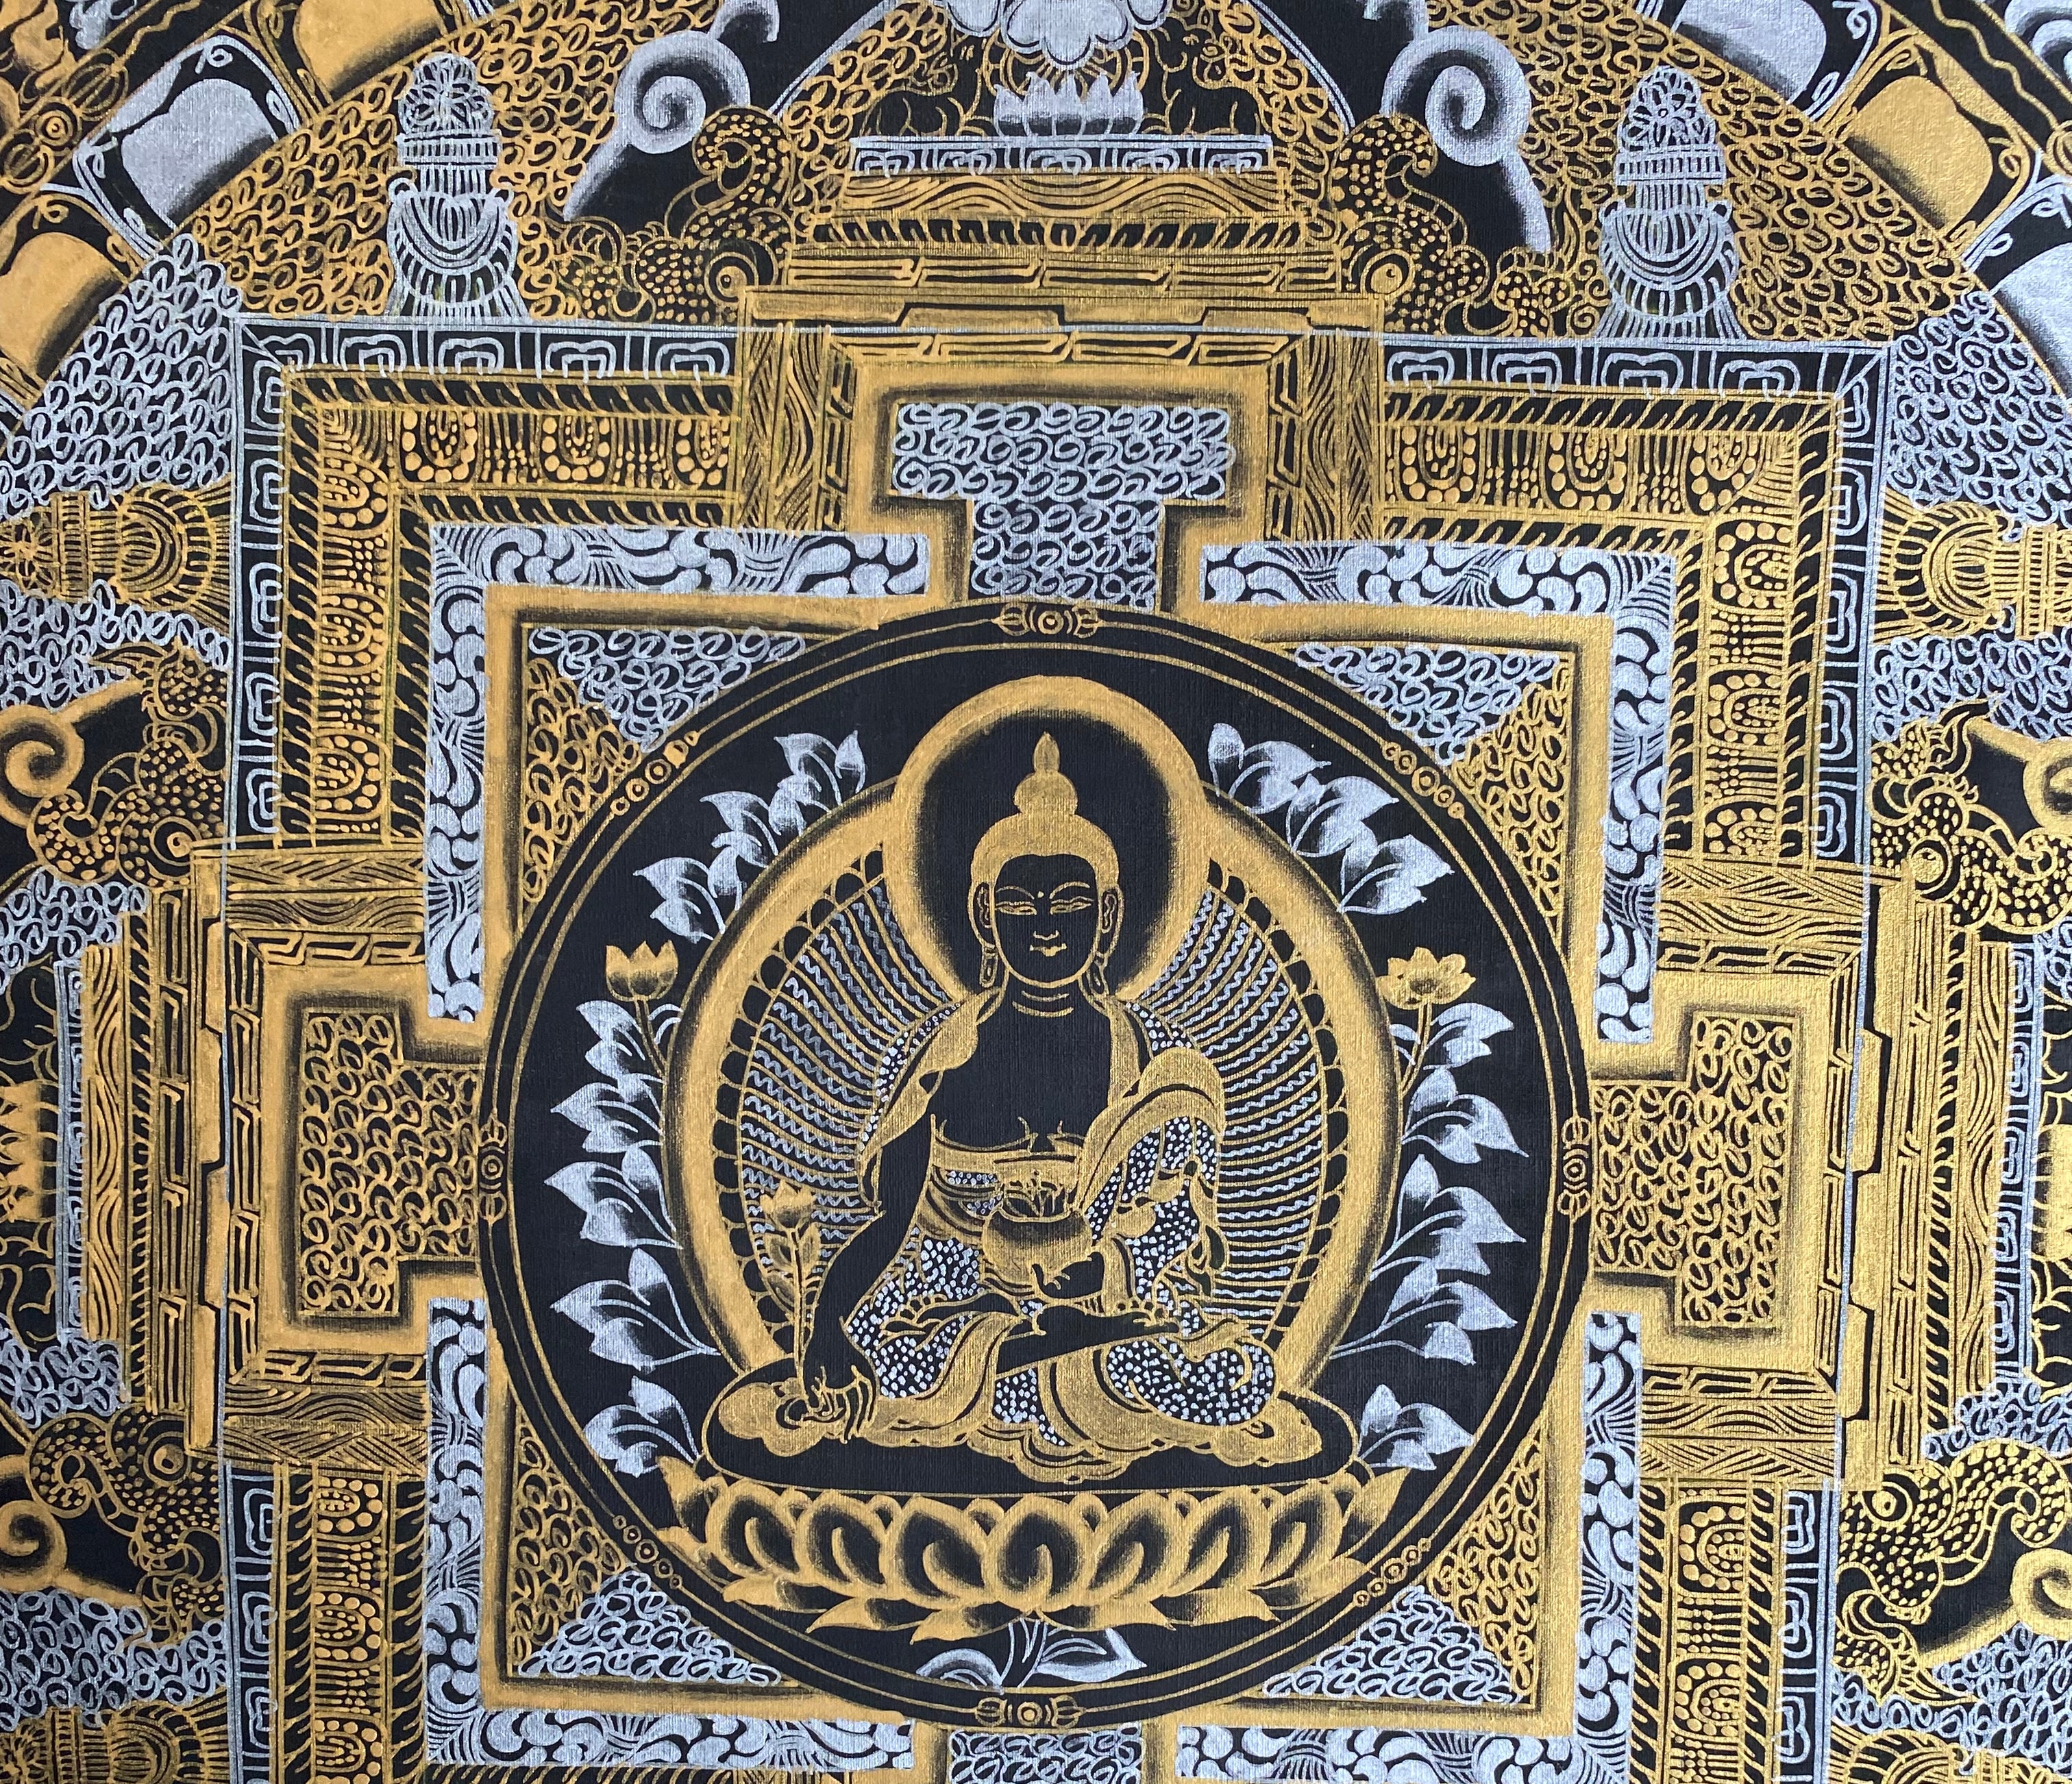 Kalachakra Mandala Thangka